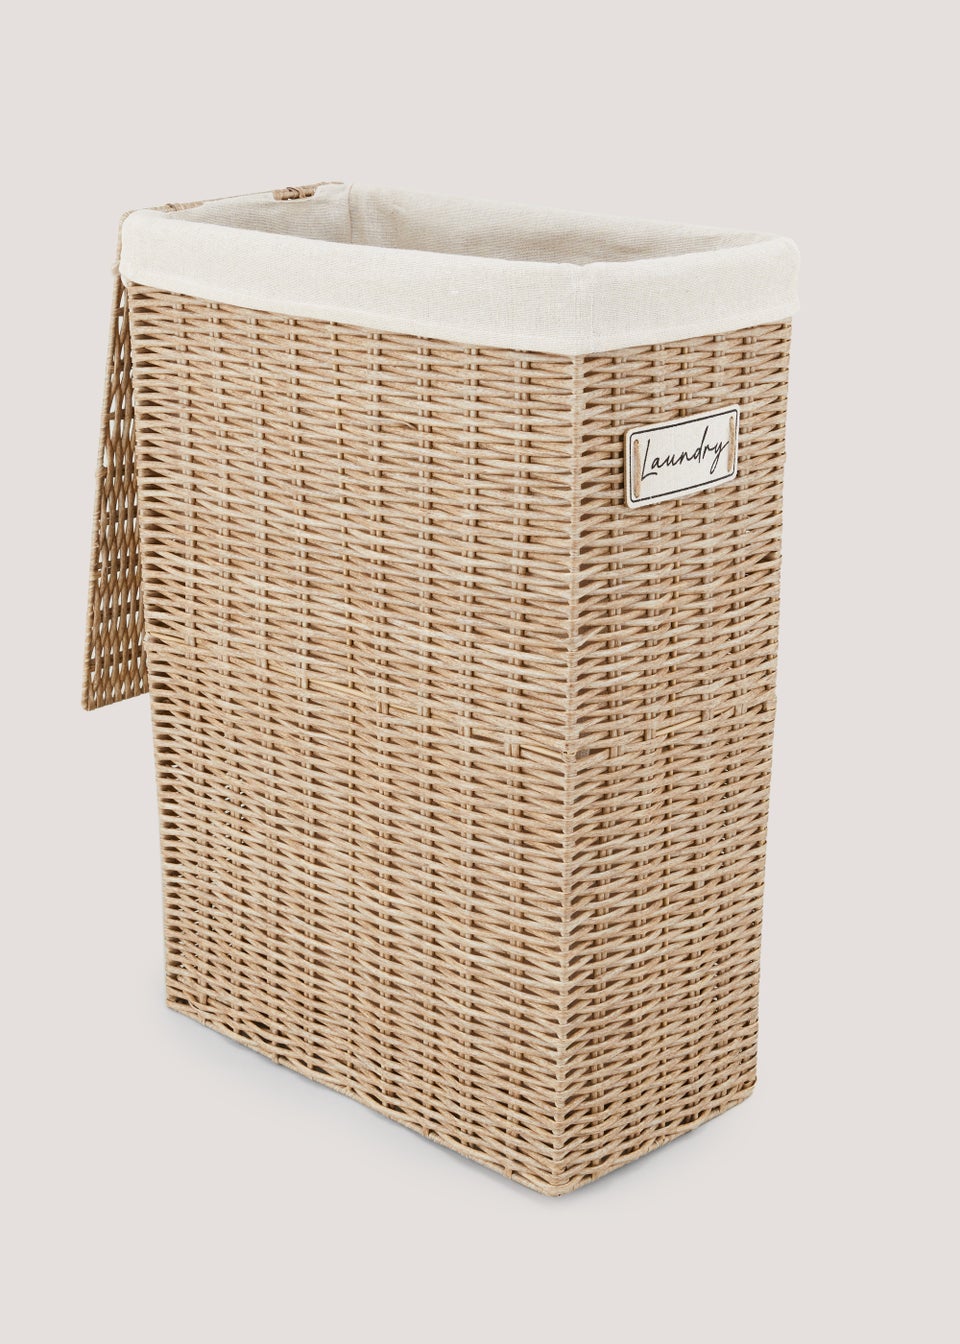 slim laundry basket